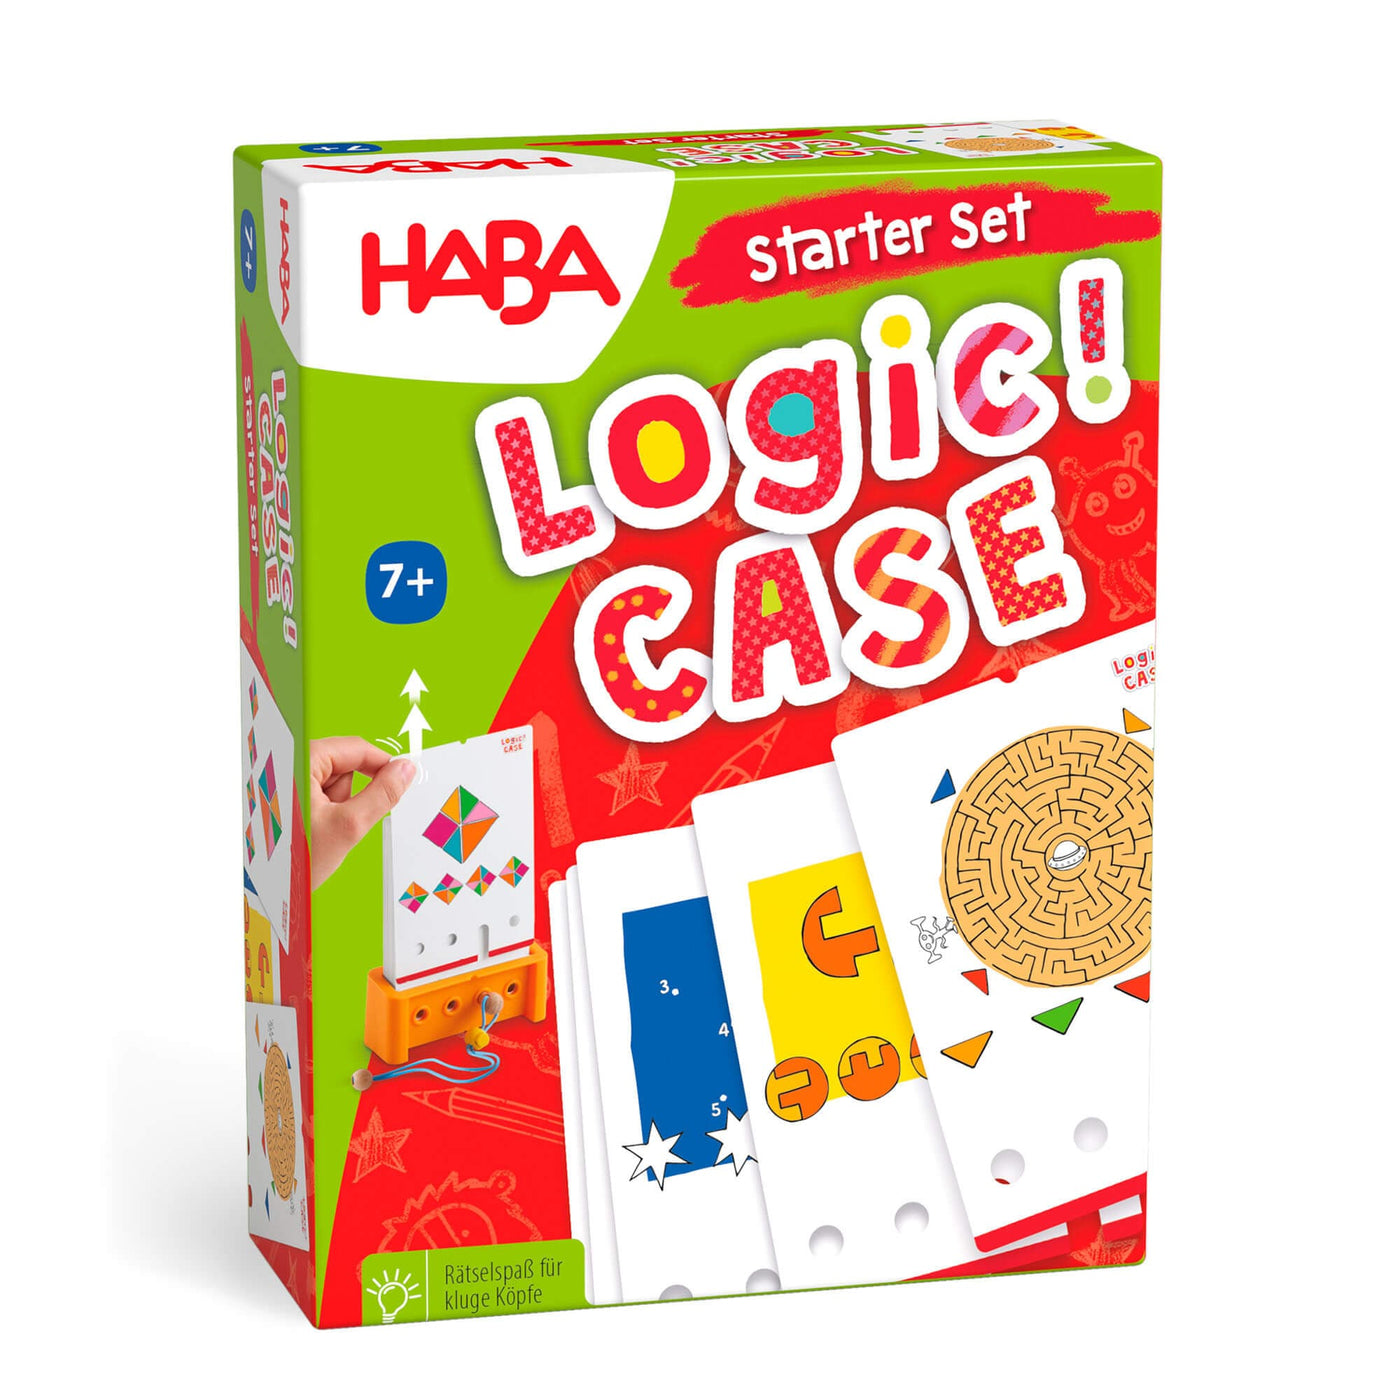 Logic! CASE Starter Set 7+ - HABA USA